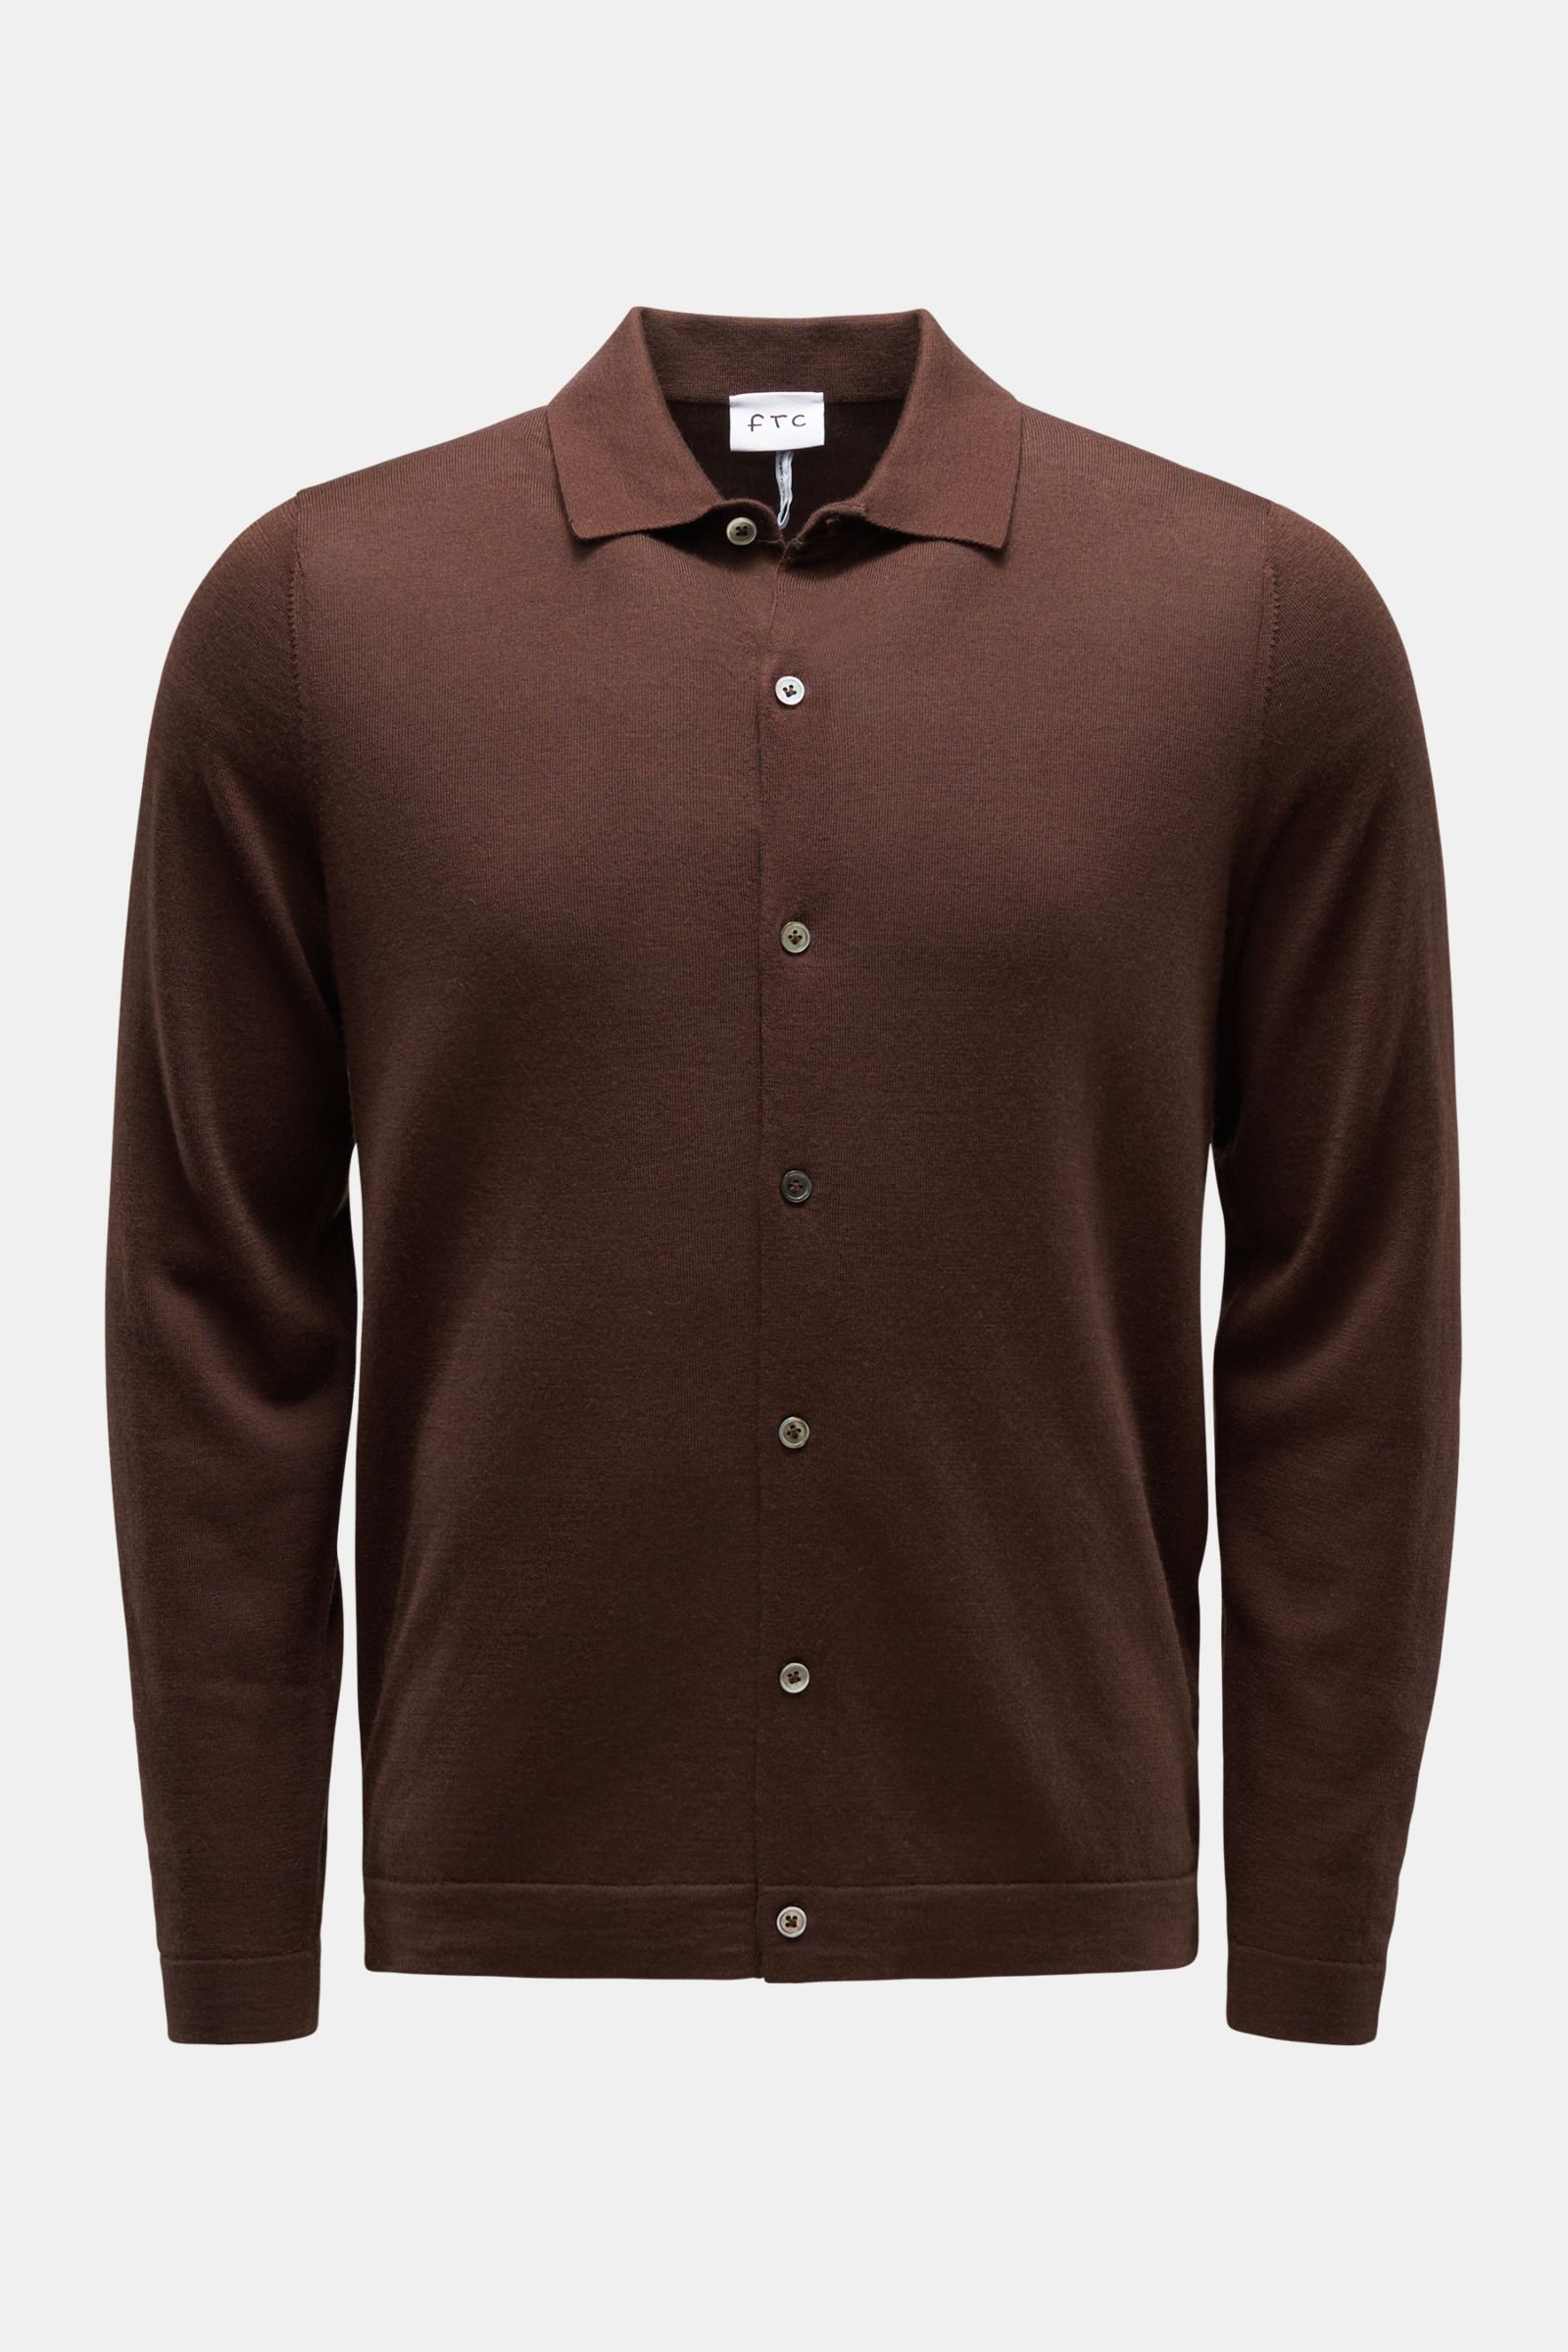 Knit shirt brown